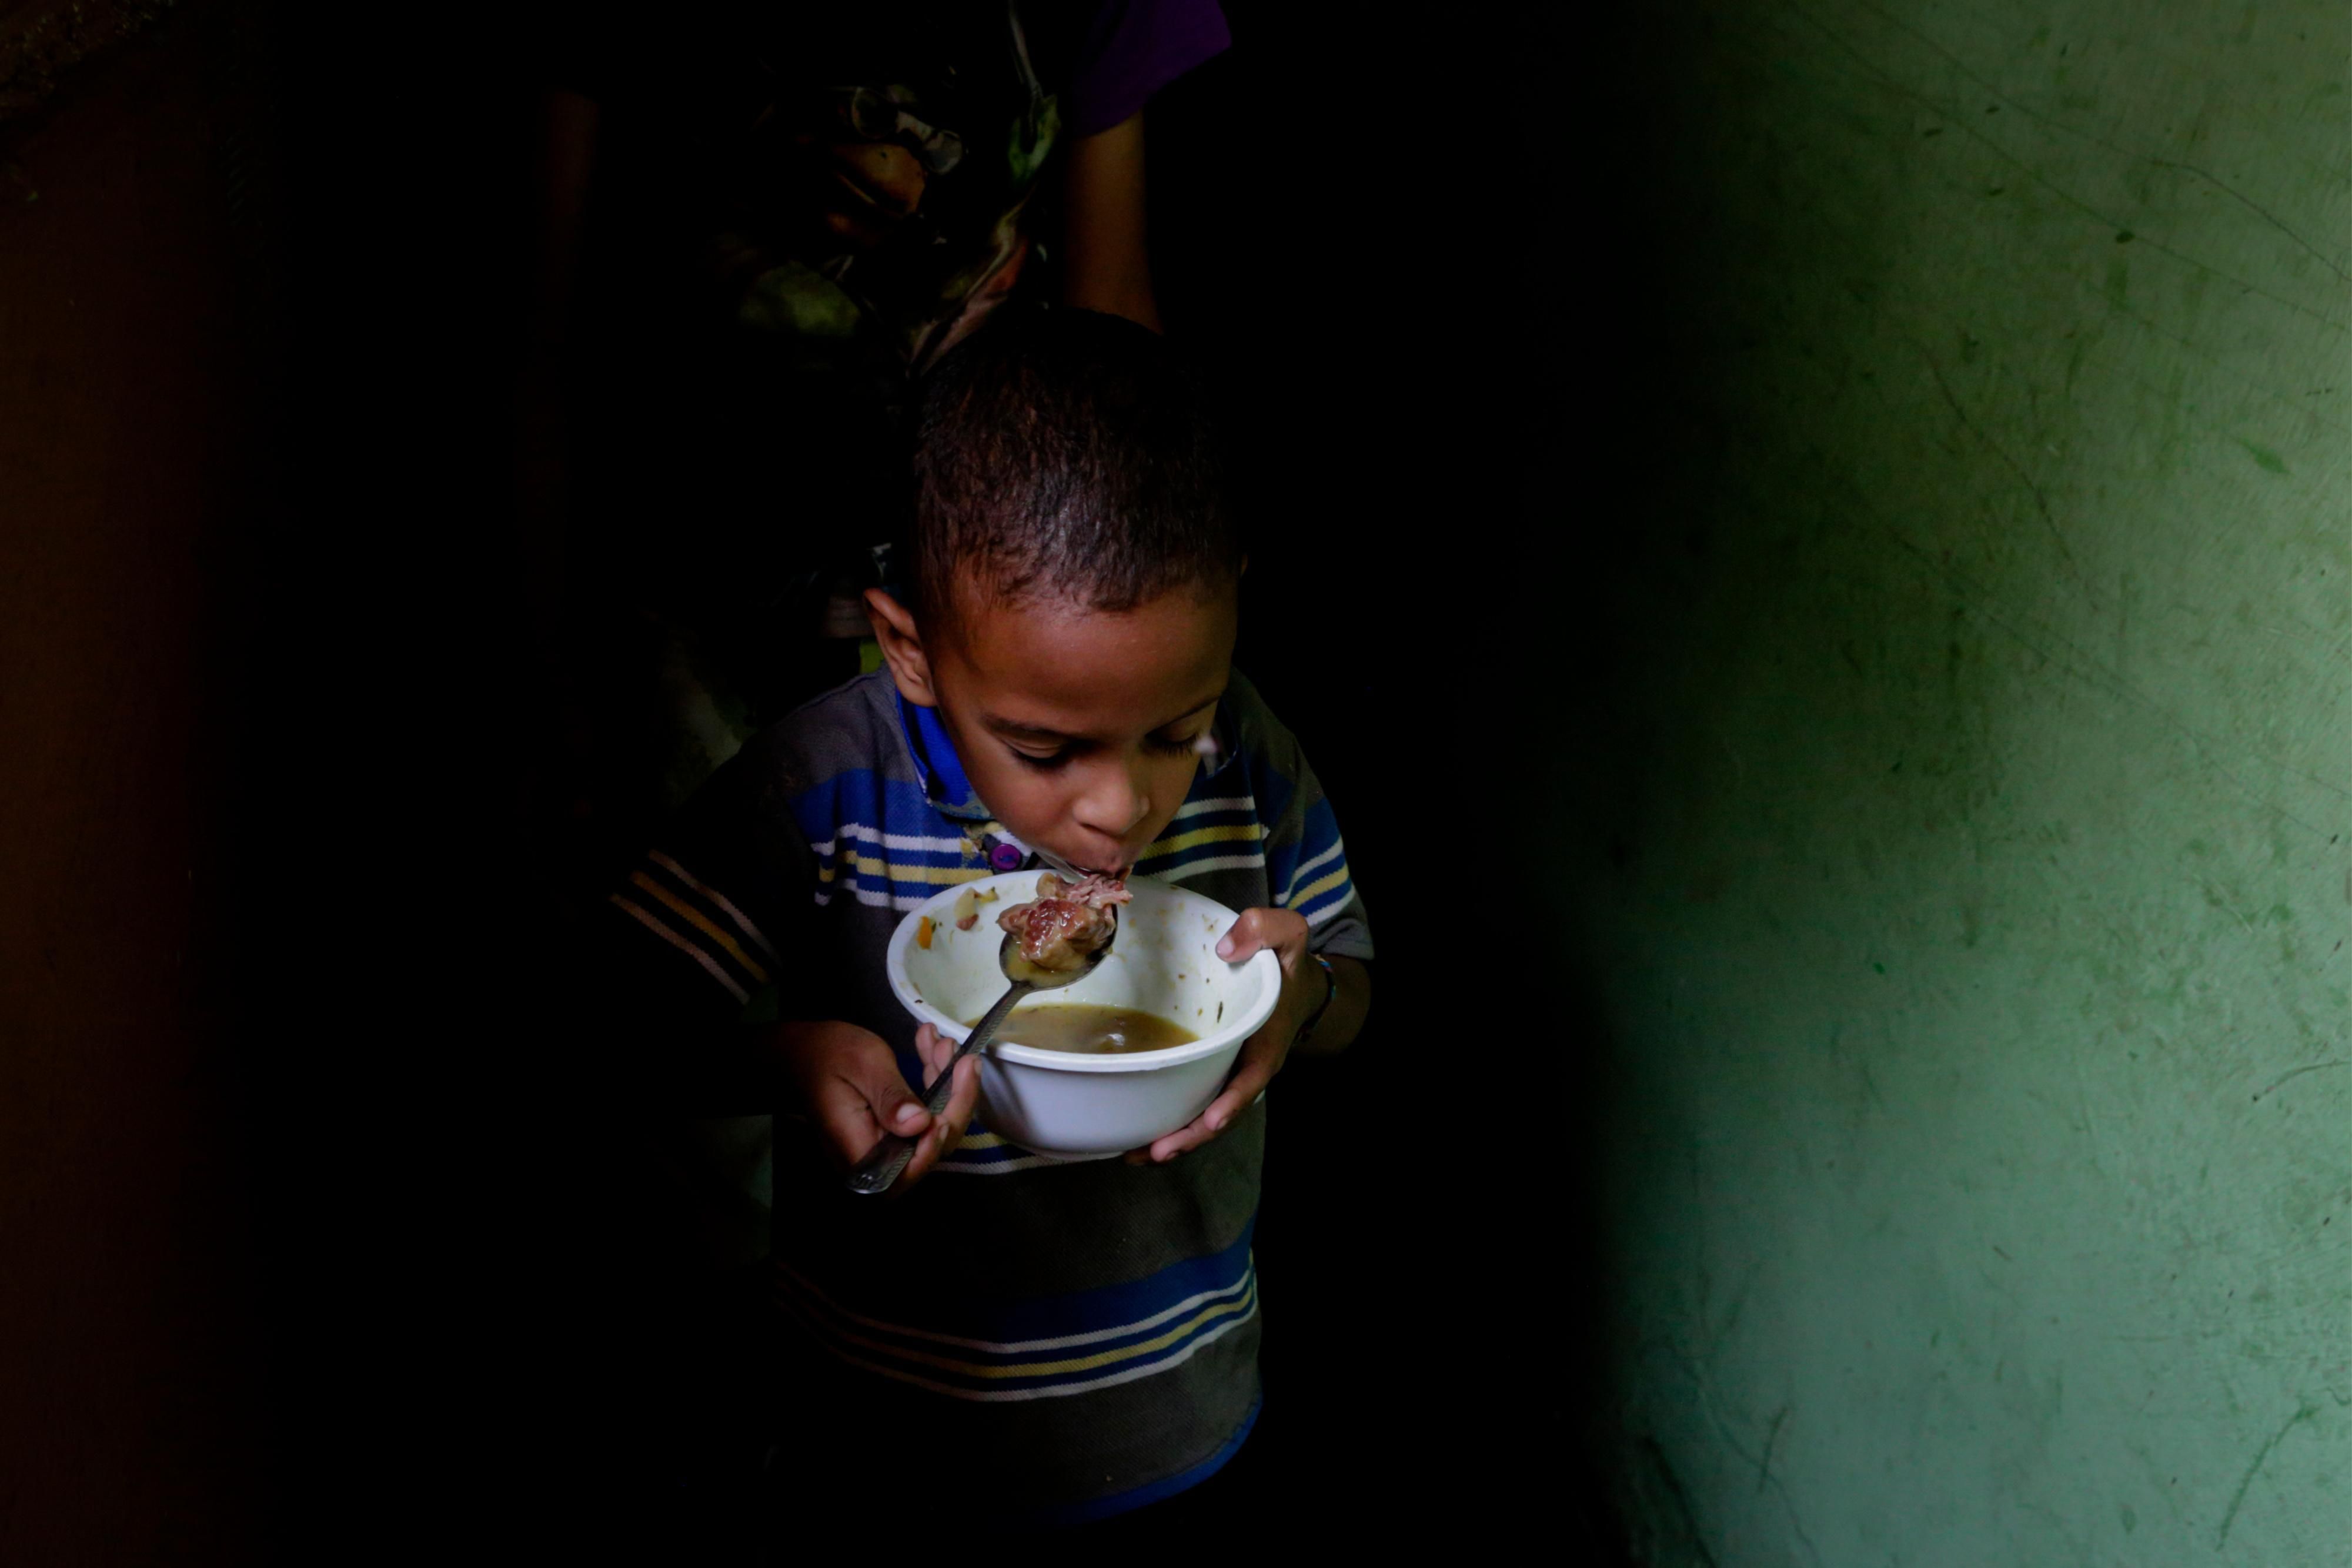 A boy eats soup prepared and donated by a local restaurant on April 12, 2019 in Caracas, Venezuela. (Photo: Eva Marie Uzcategui via Getty Images)